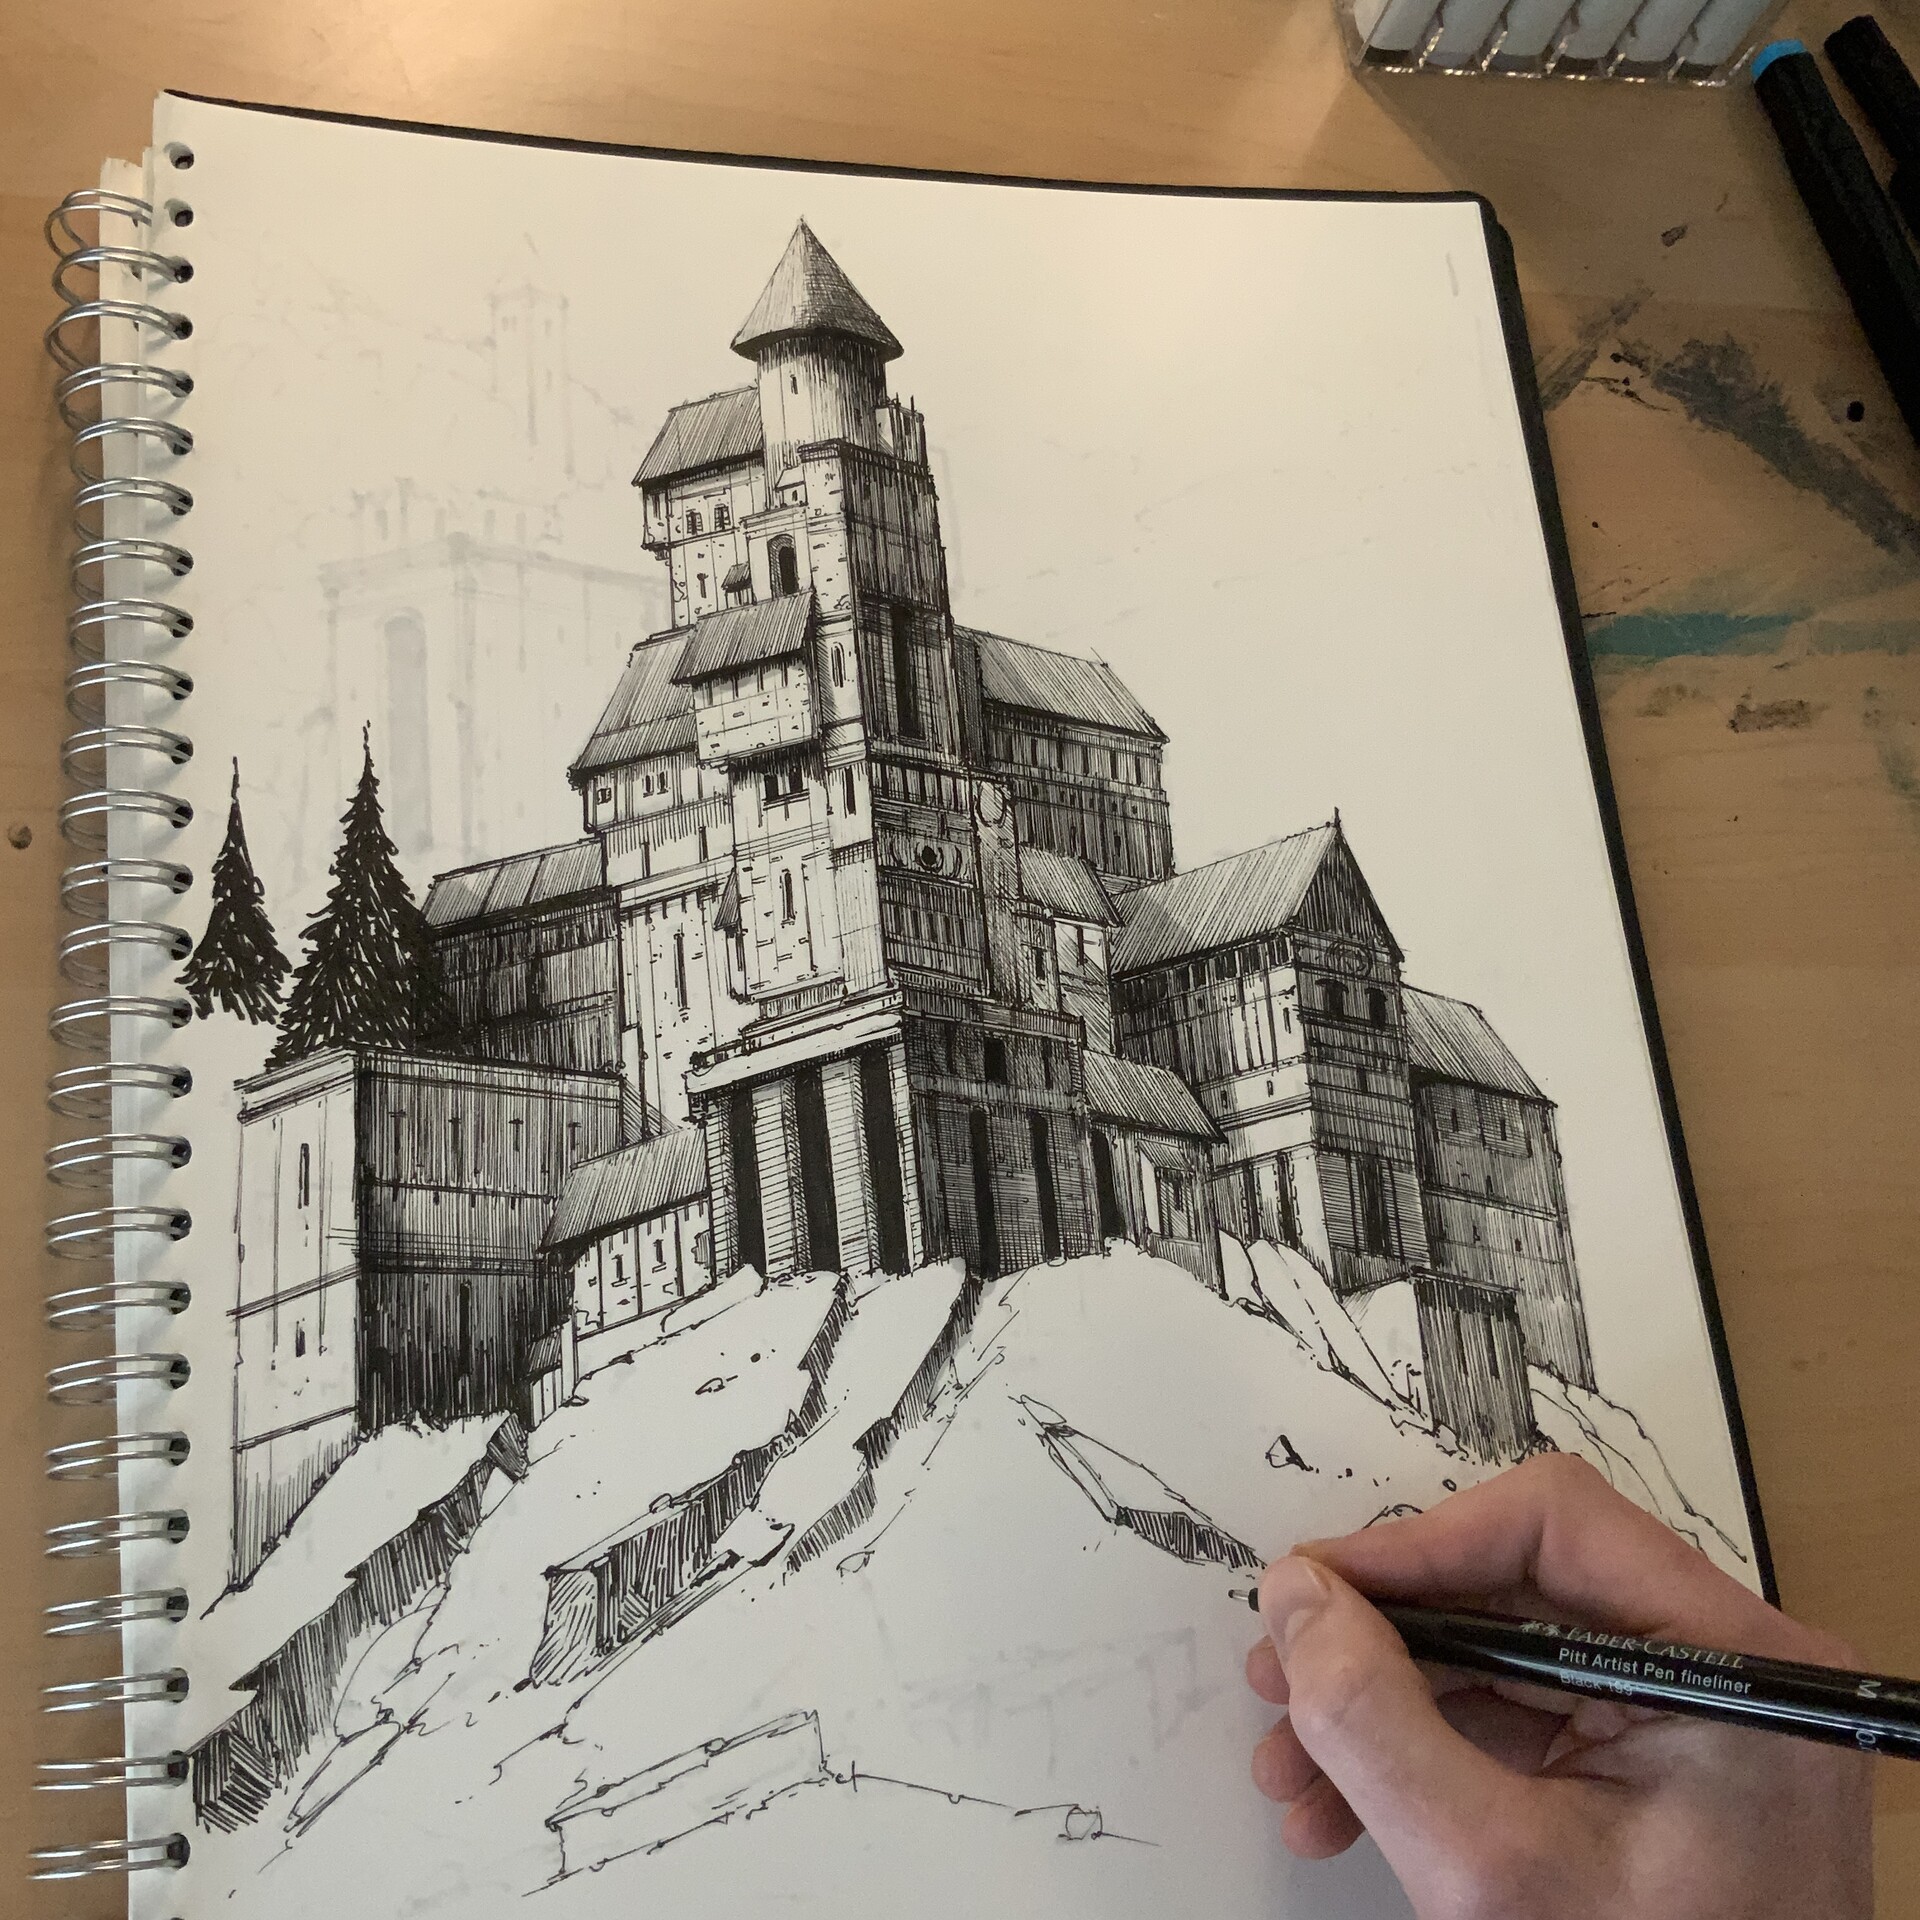 ArtStation - Traditonal imaginary castle freehand sketch